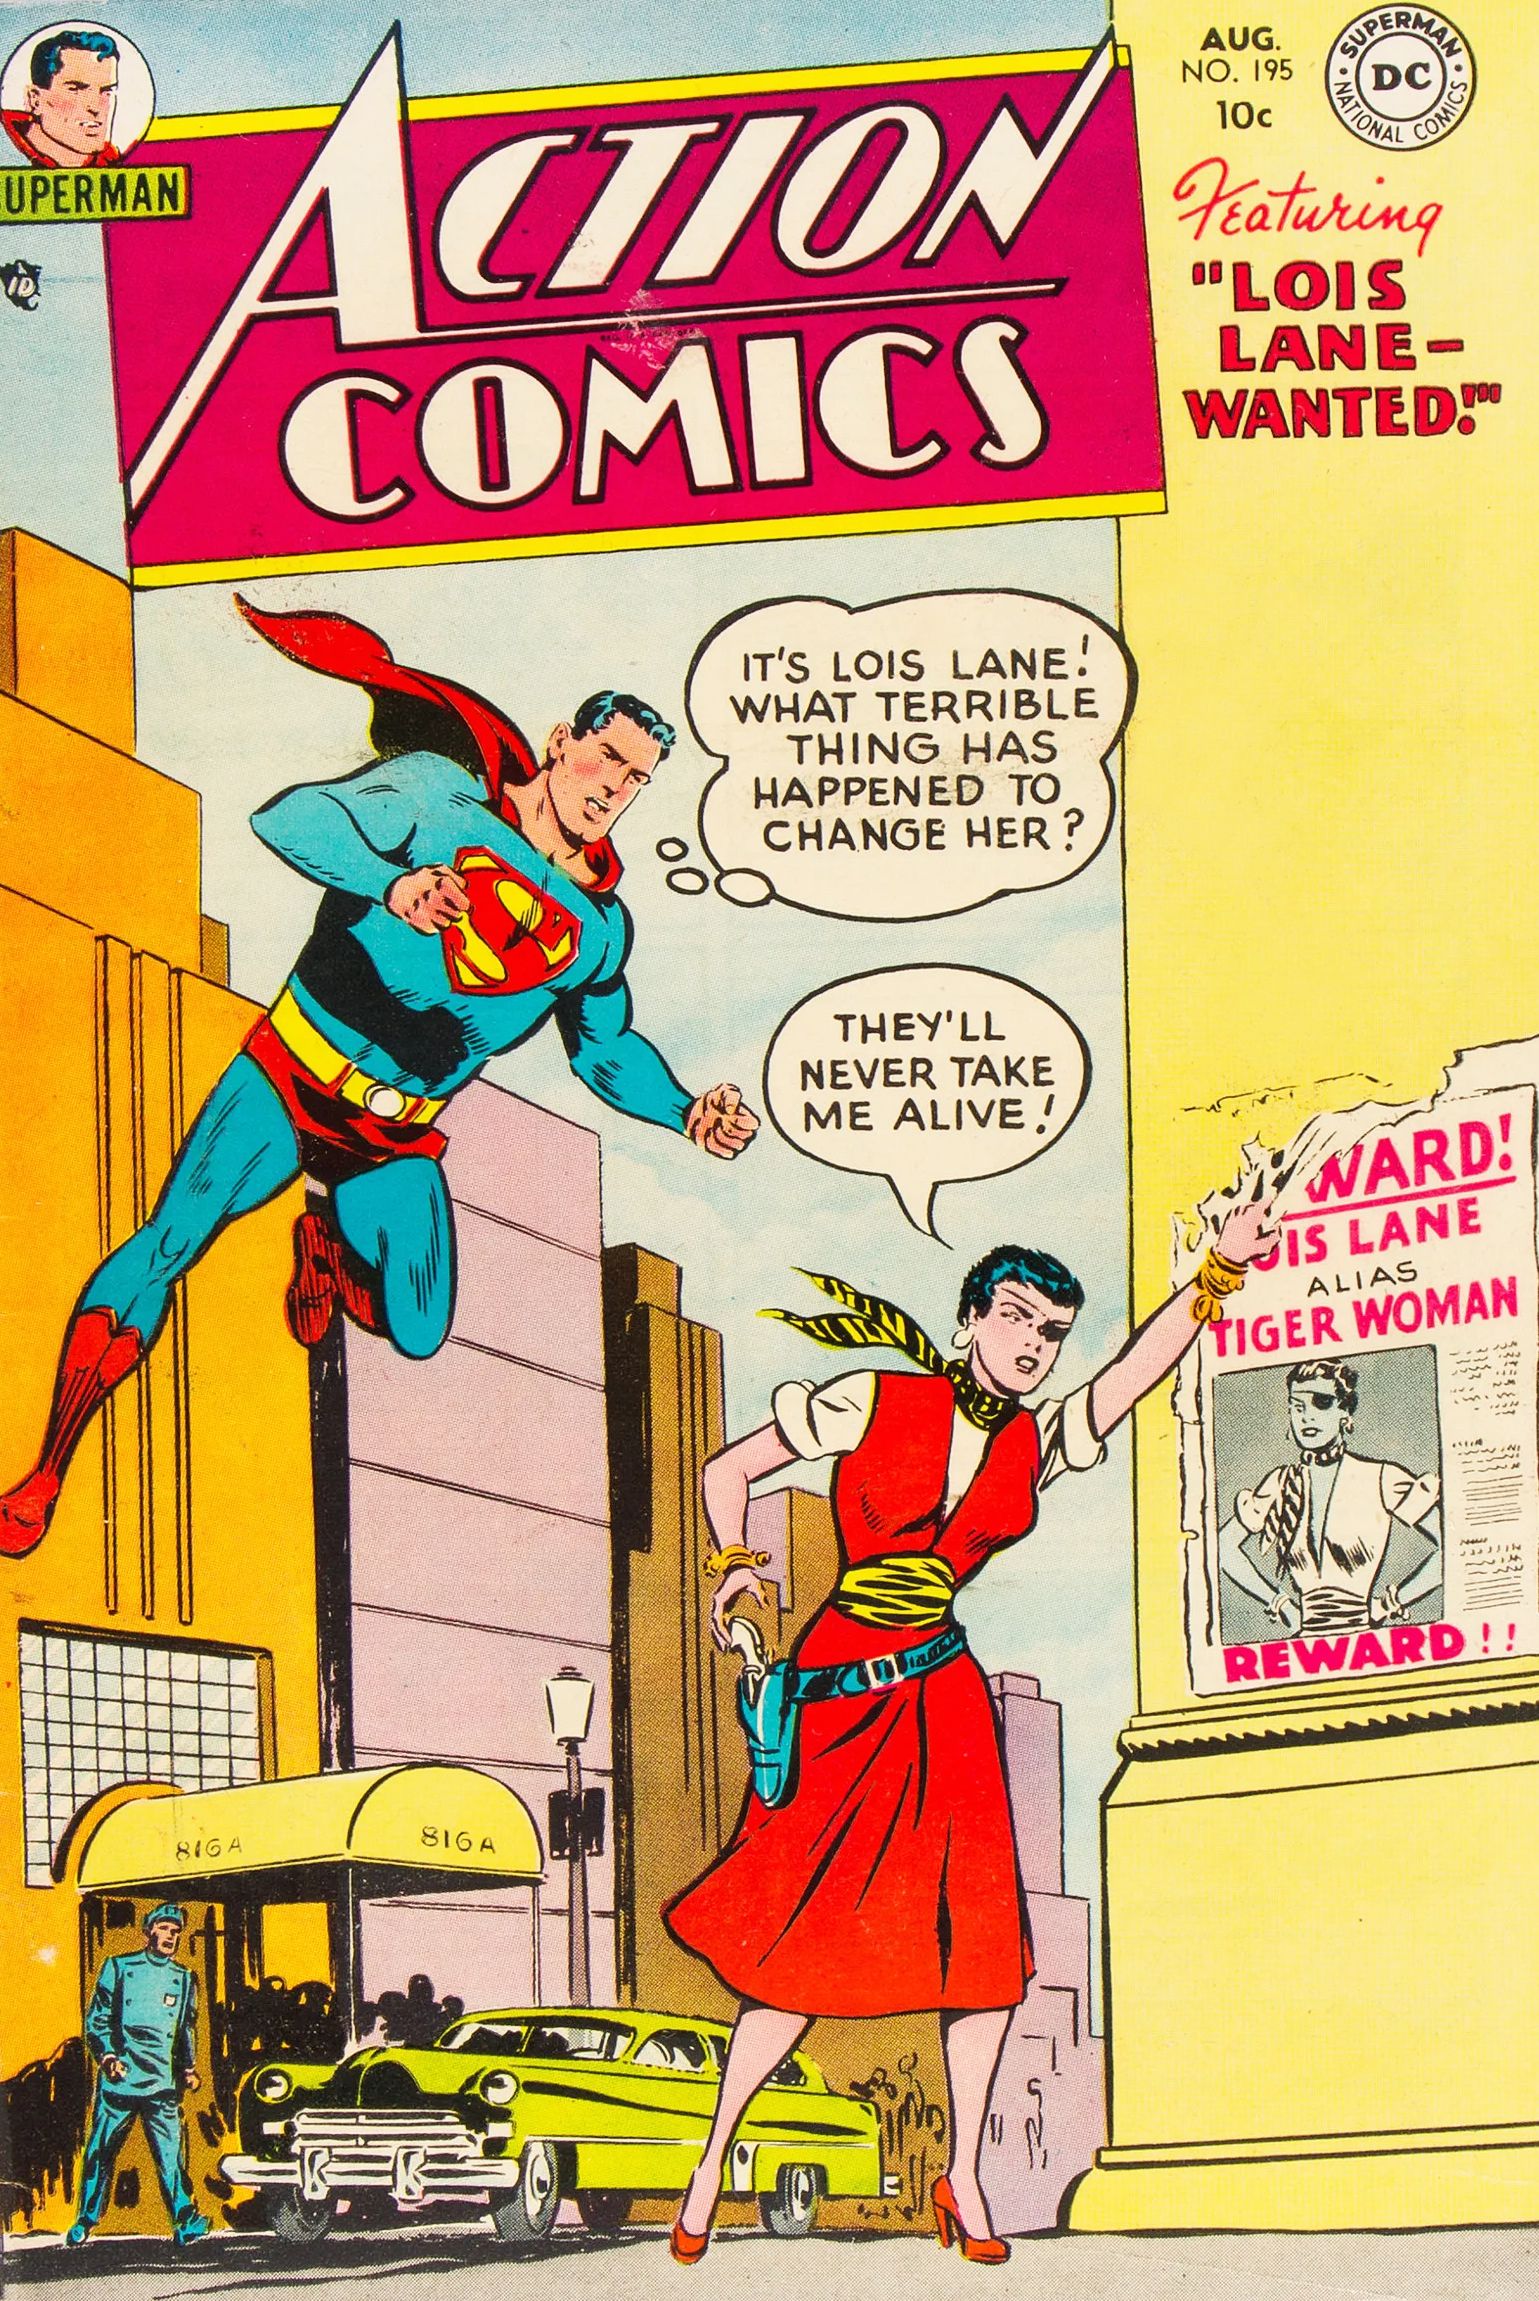 Action Comics #195 Comic